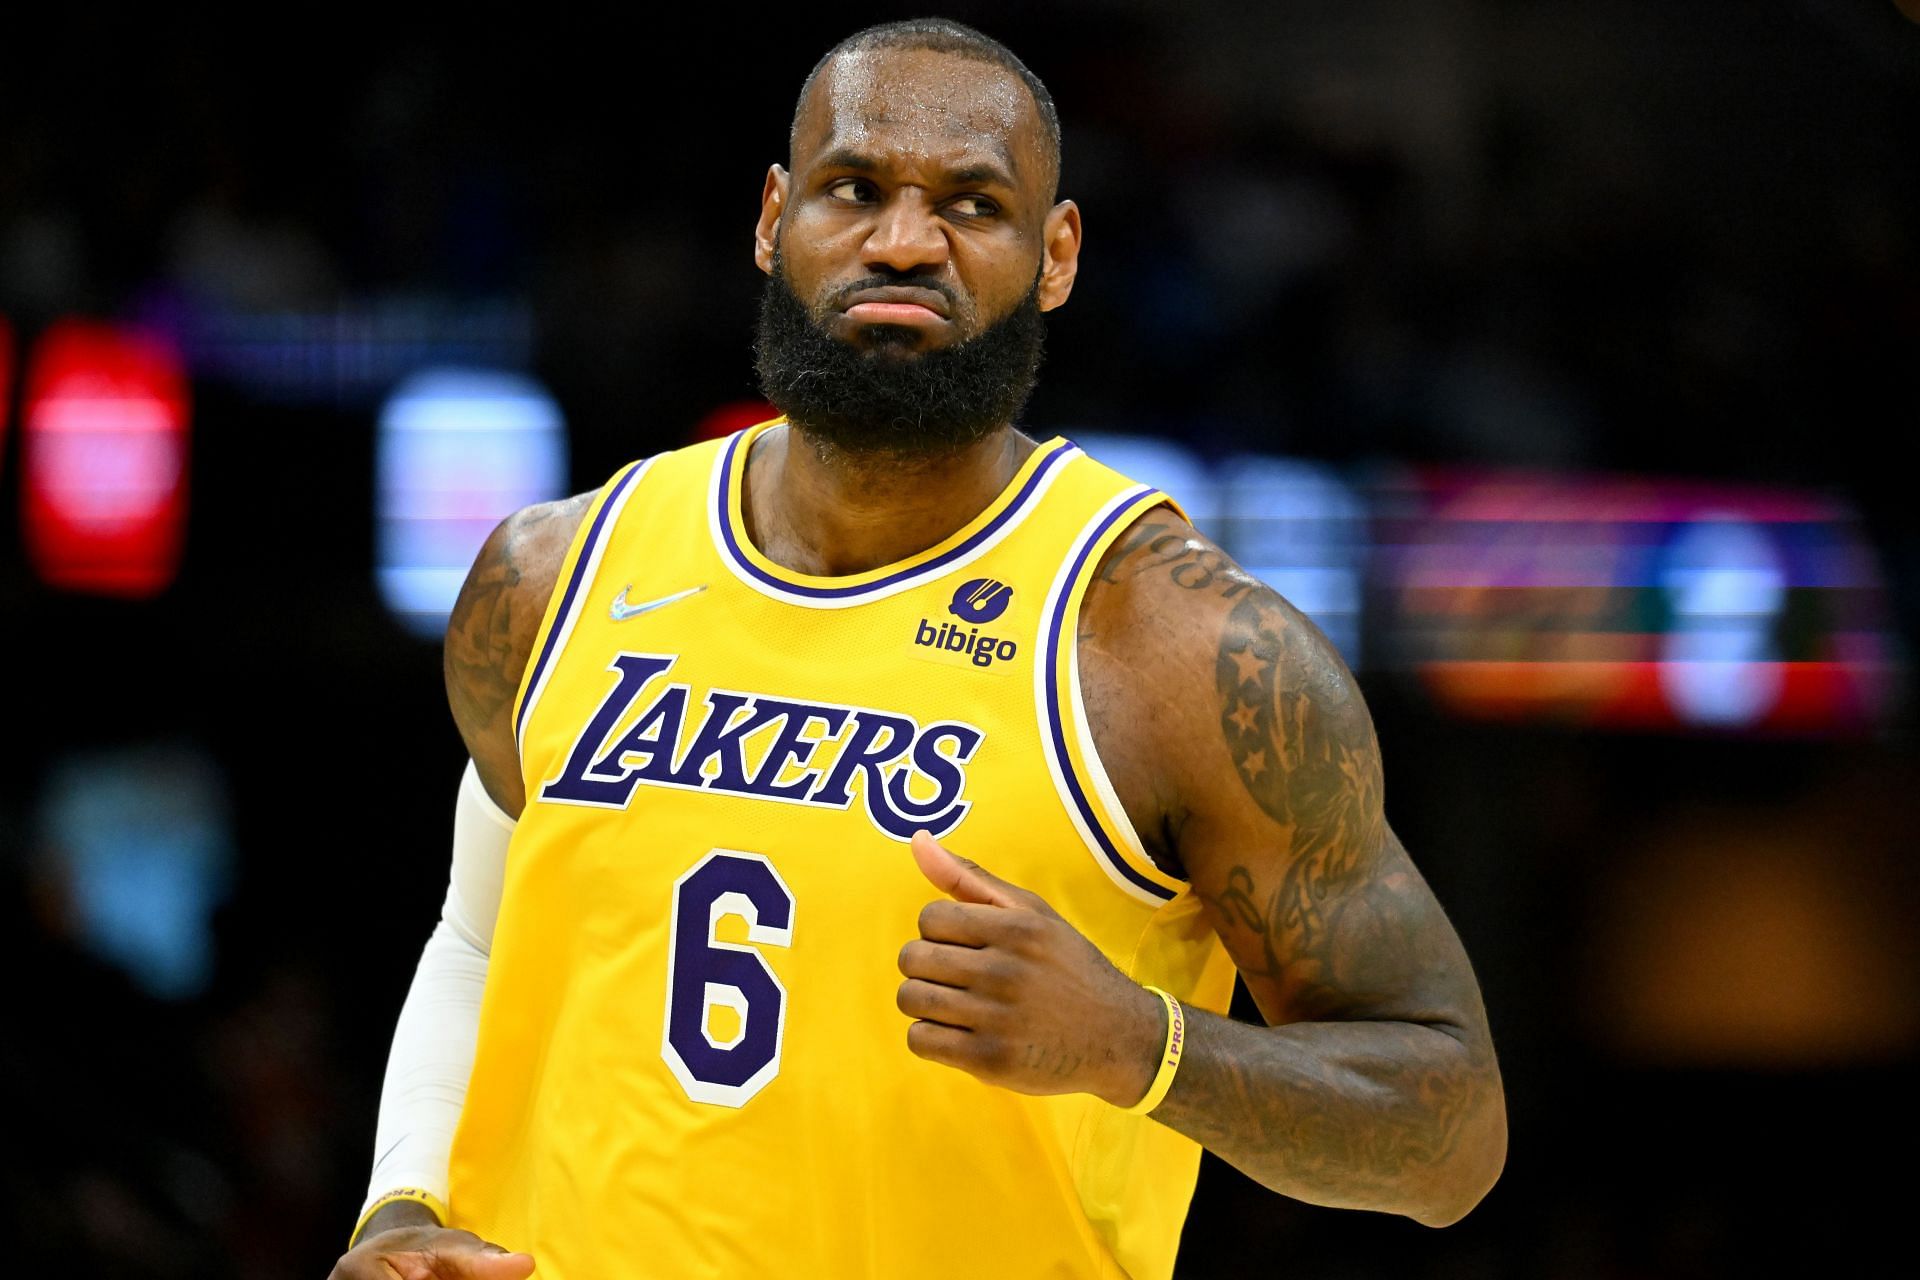 Los Angeles Lakers v Cleveland Cavaliers; LeBron James celebrates